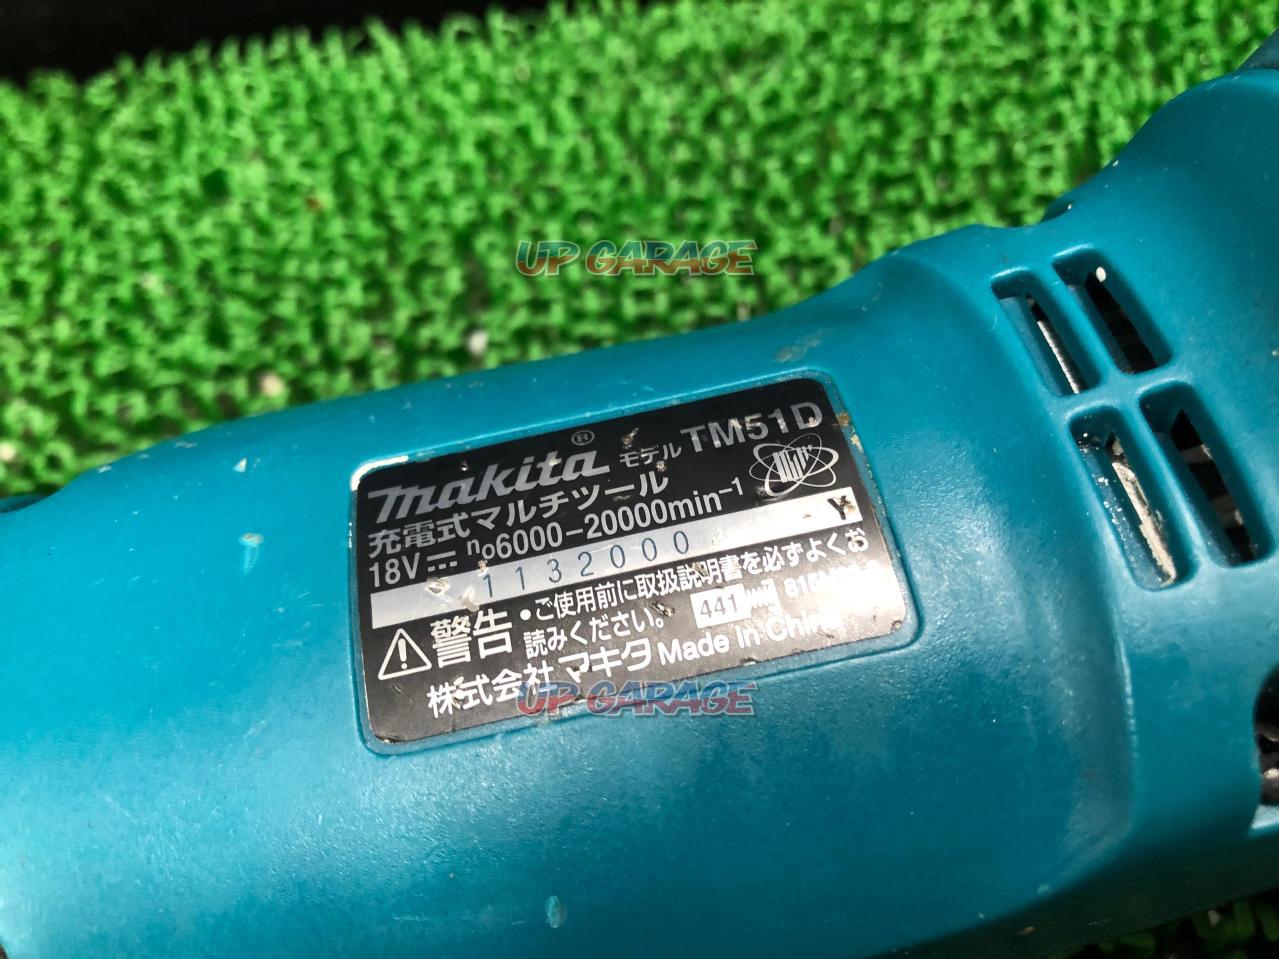 makita マキタ TM51D 充電式マルチツール 18V 本体のみ | 切断機